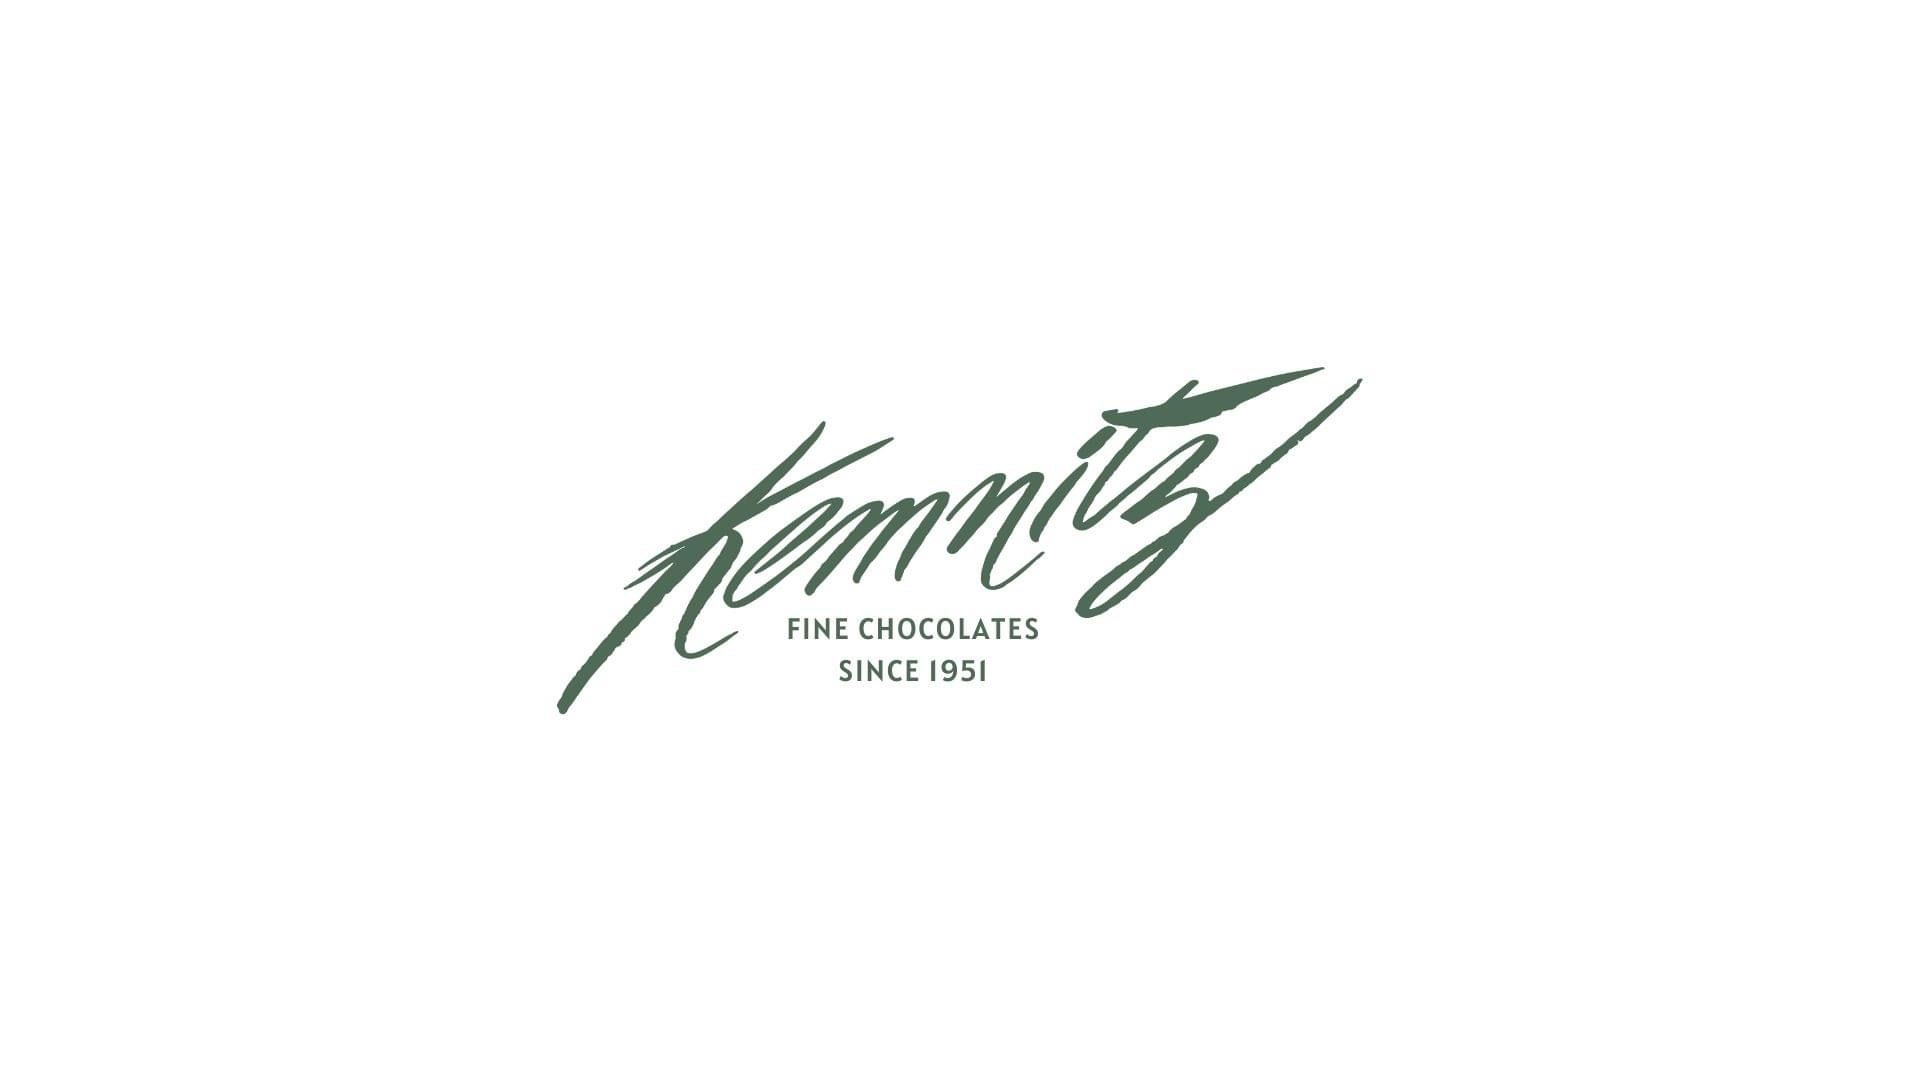 Handcrafted Since 1951 - Kemnitz Fine Candies